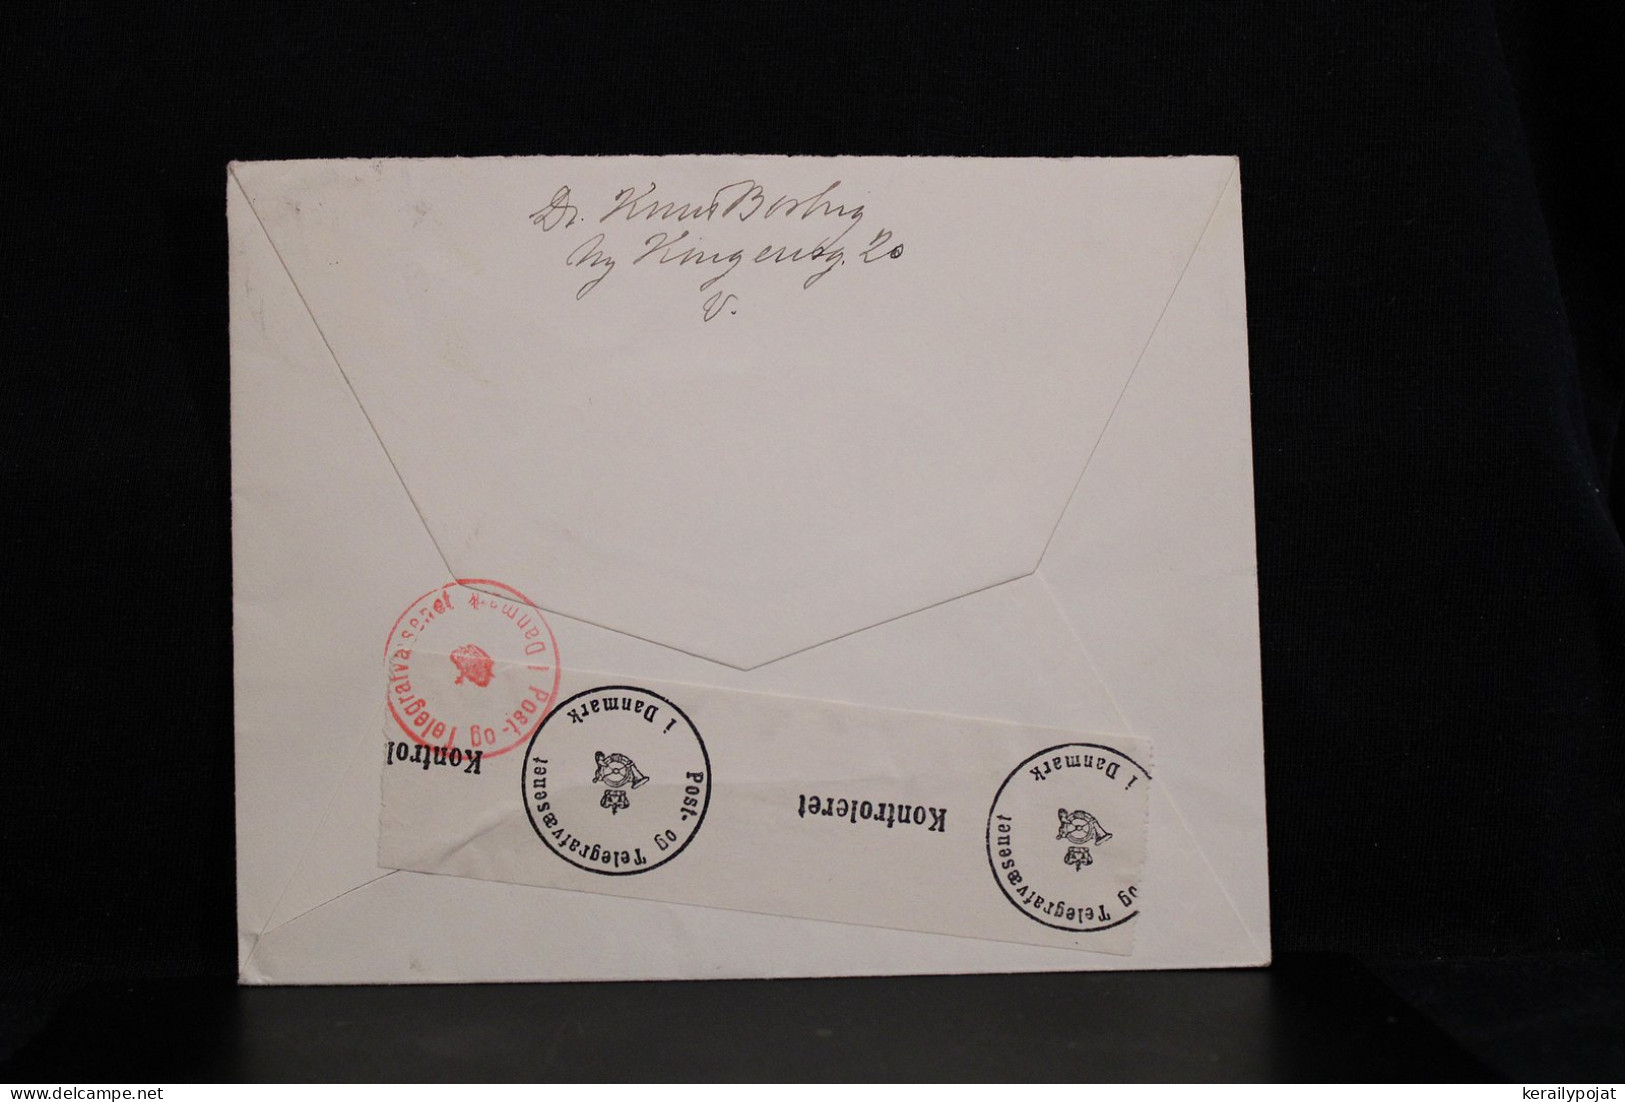 Denmark 1943 Köbenhavn Censored Air Mail Cover To Sweden__(8146) - Airmail